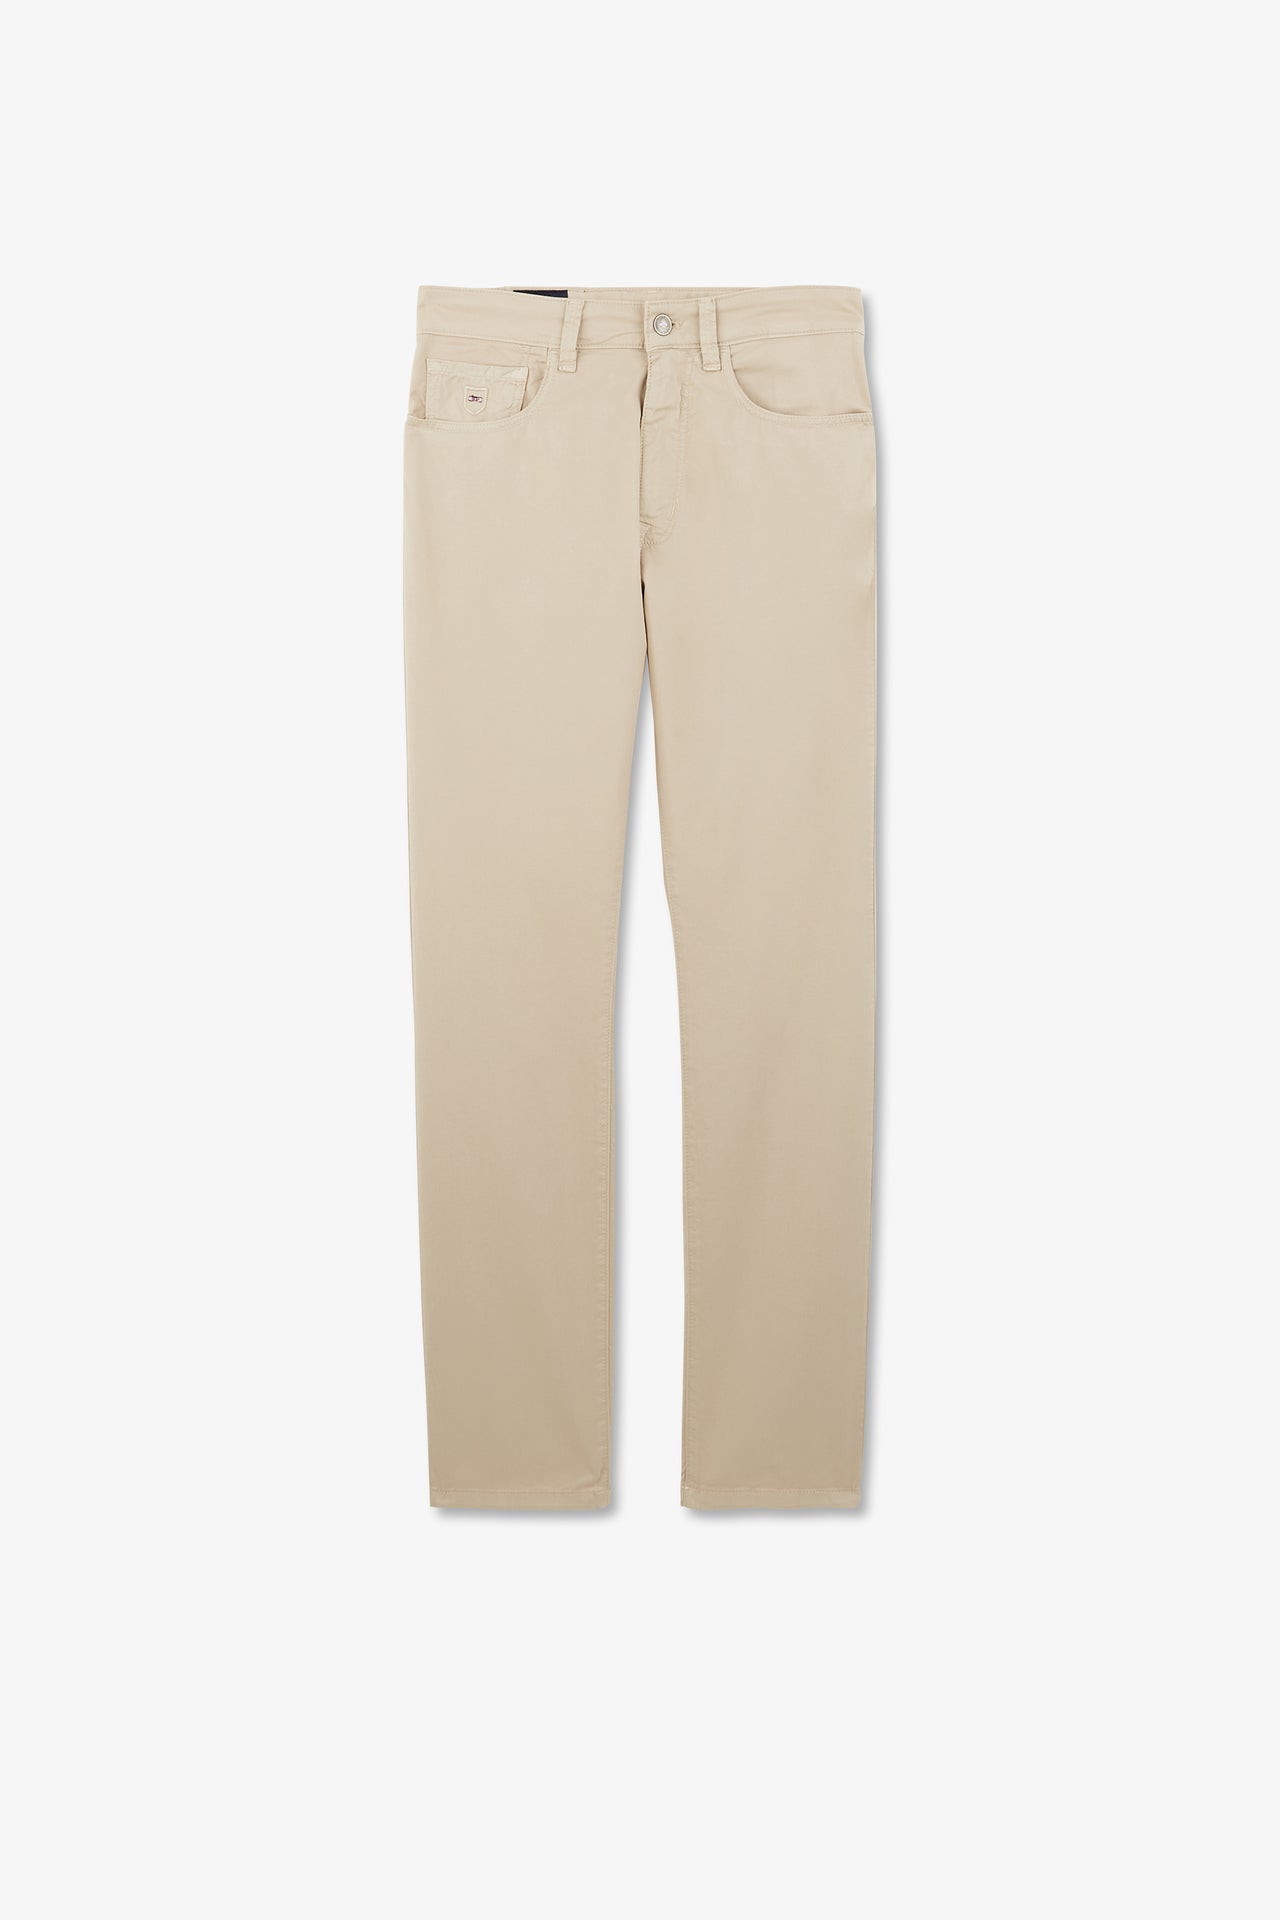 5-pocket straight-leg beige trousers - Image 2